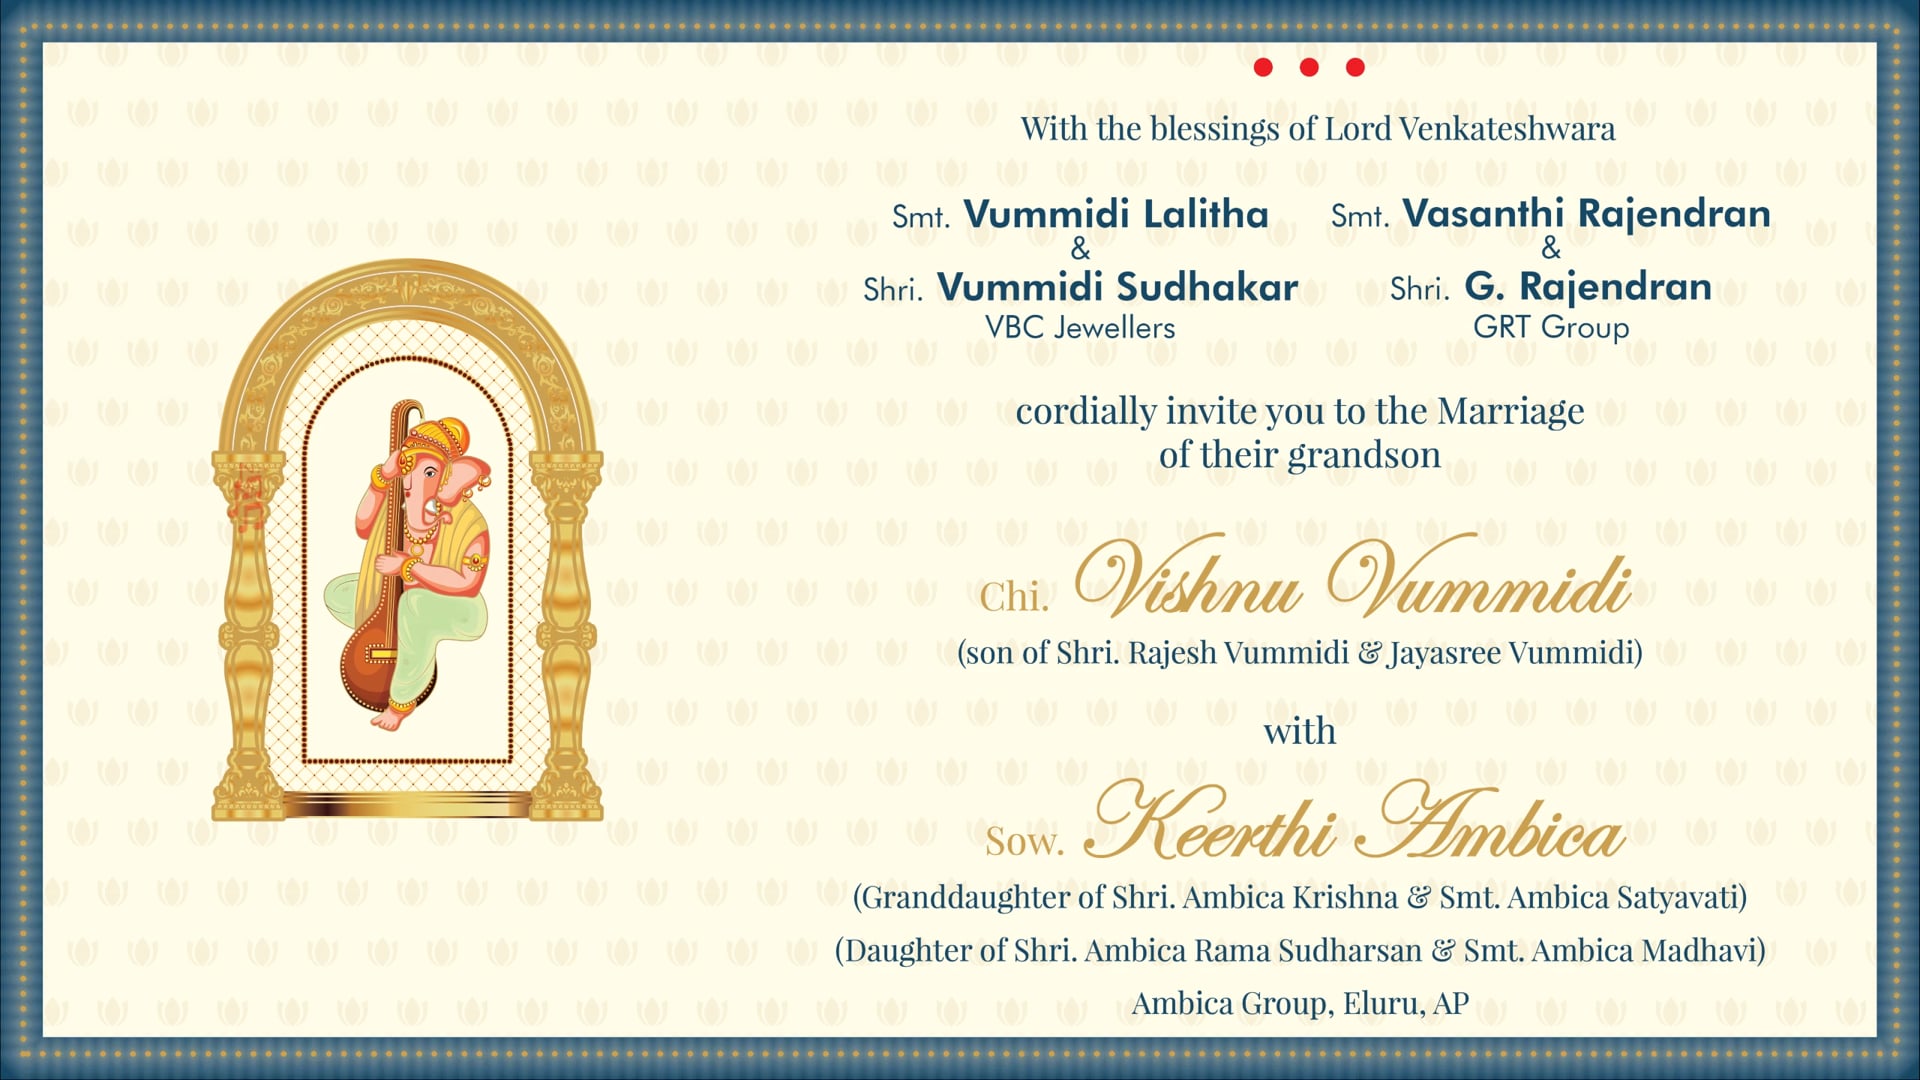 Vishnu weds Kreethi